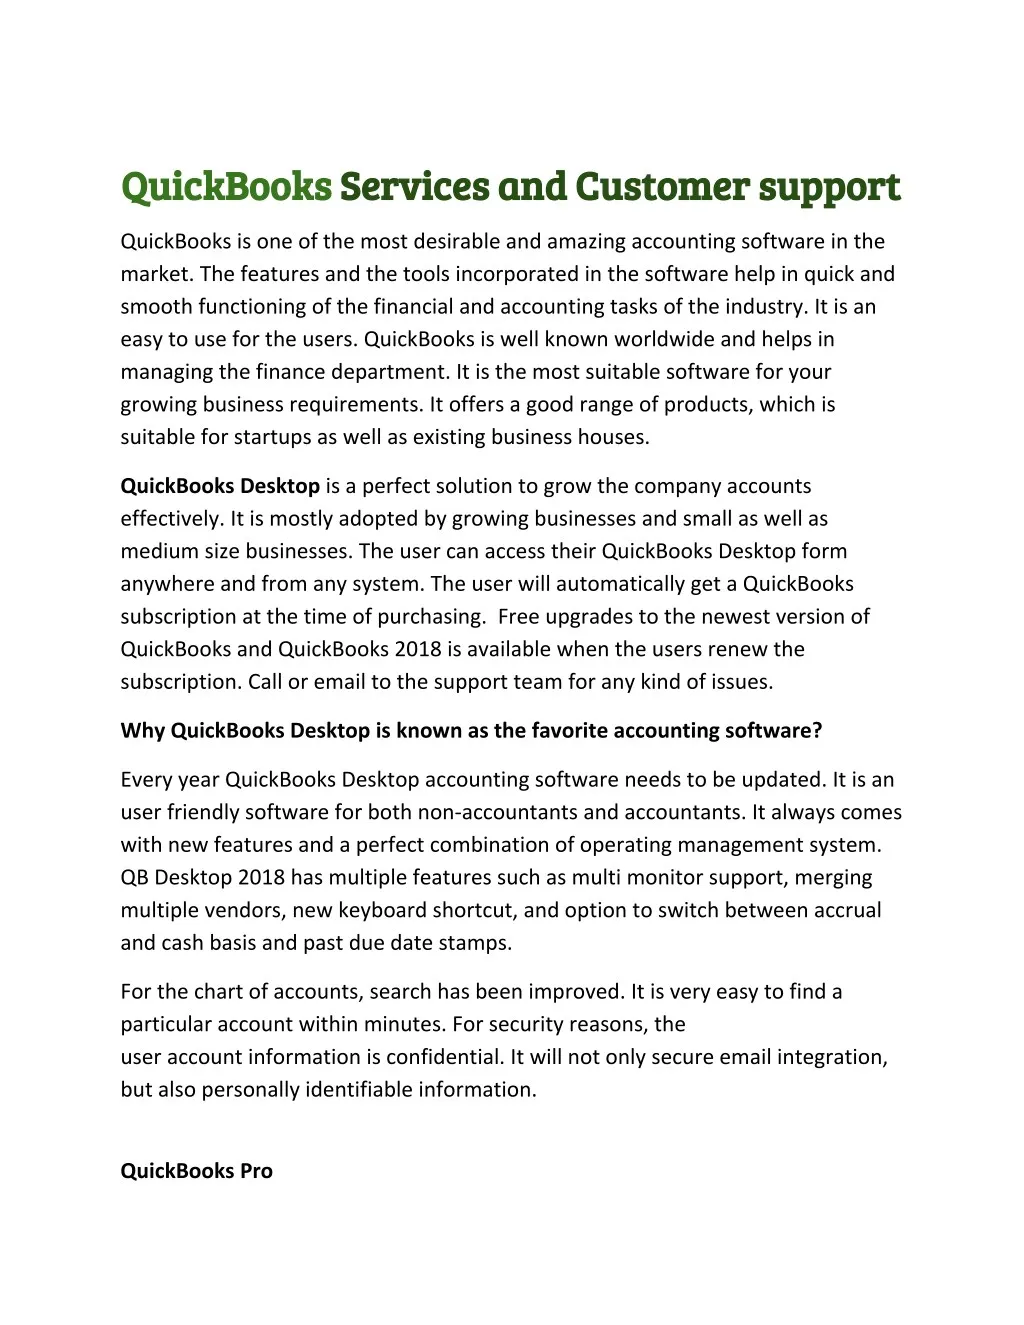 quickbooks quickbooks services and customer